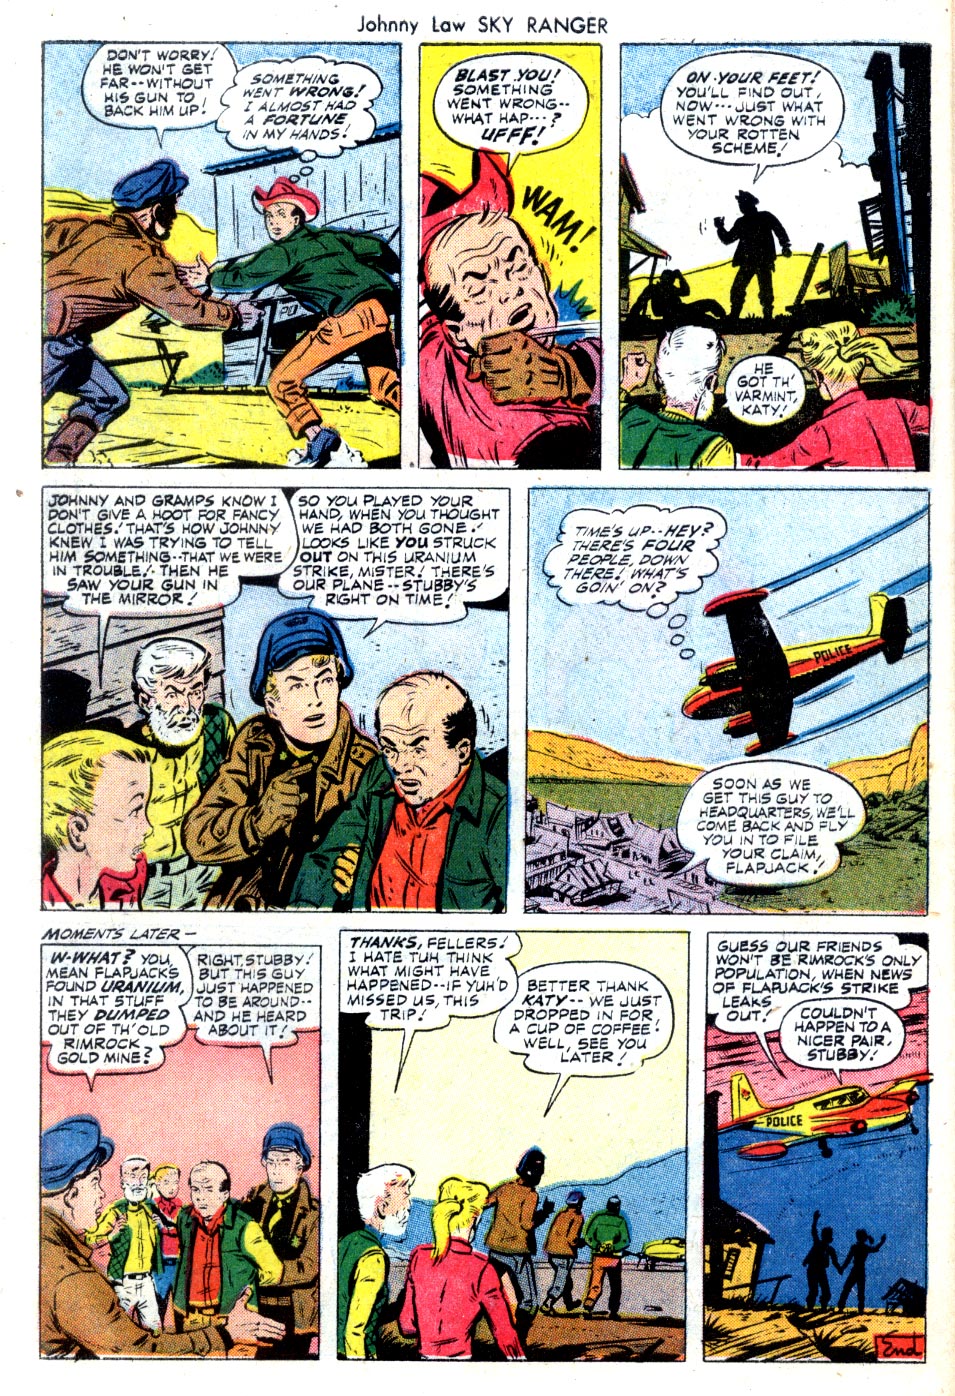 Read online Johnny Law Sky Ranger Adventures comic -  Issue #4 - 32